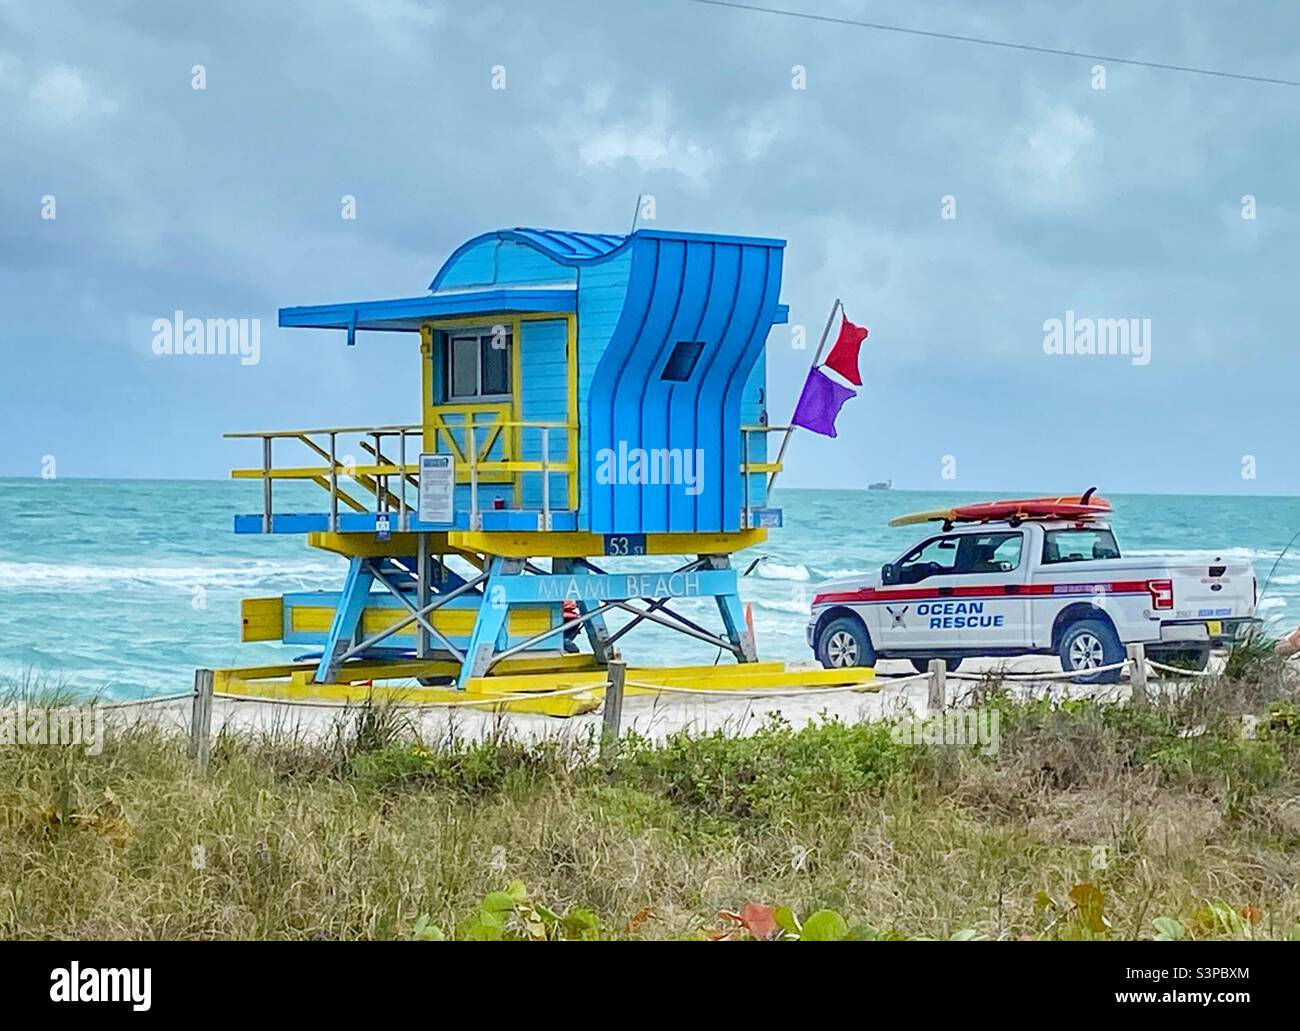 Lifeguard tower in south beach Miami Florida Stock Photo